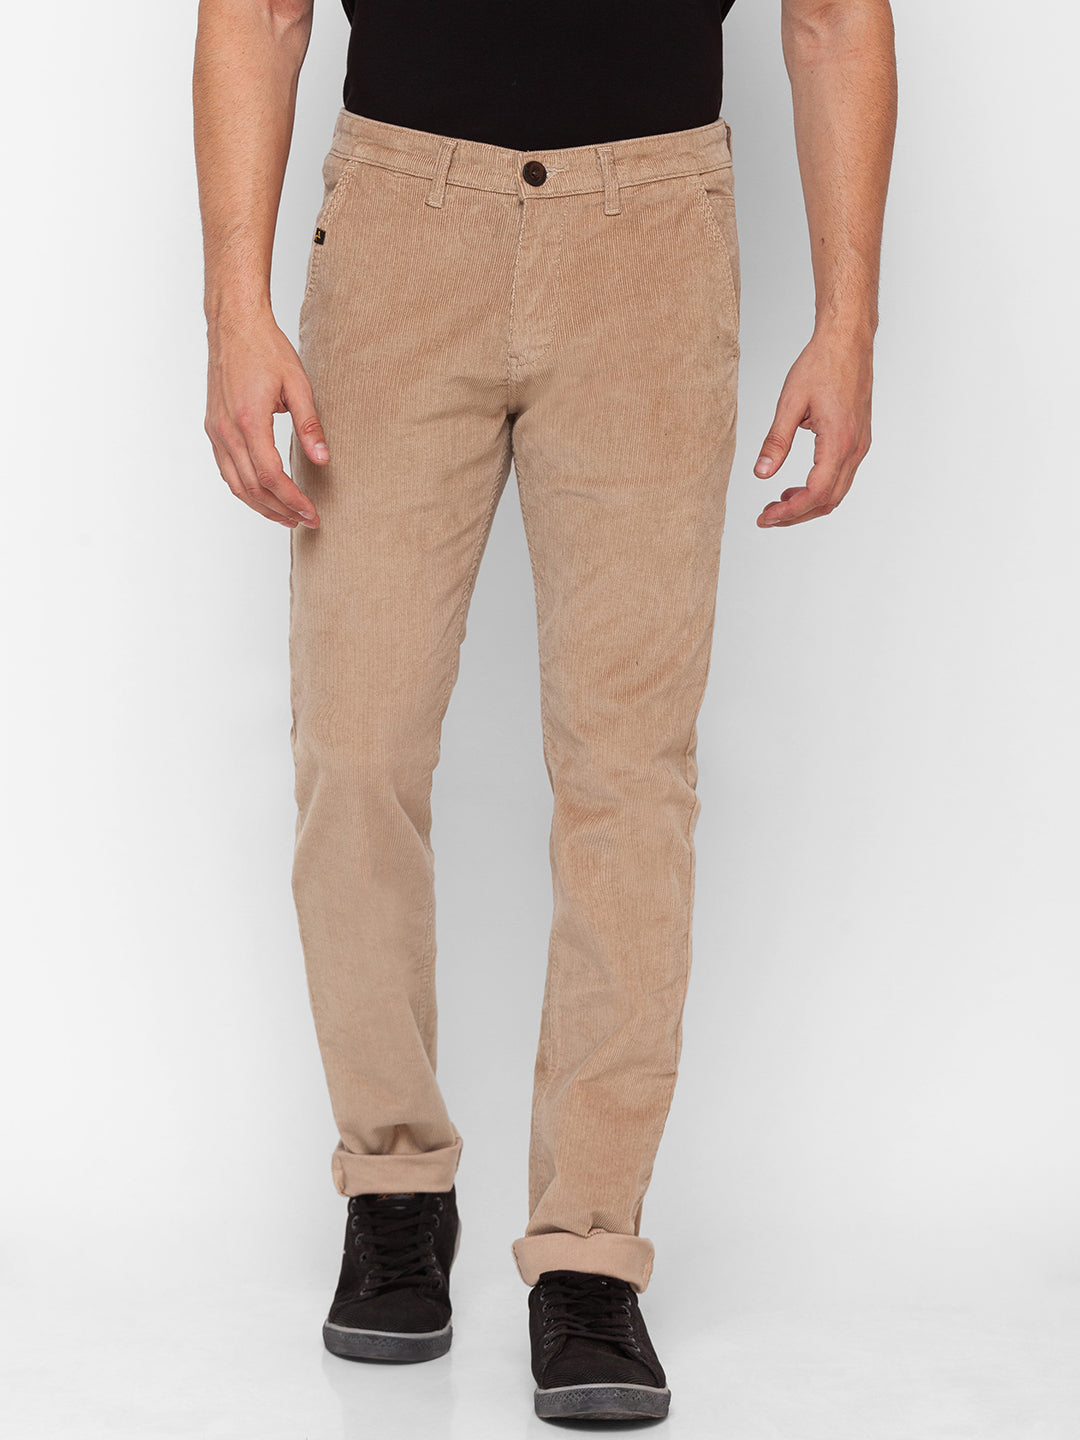 Mens Jogging Trousers - Mens Flat-Front Pants, Tapered Pants, Pinstripe  Pants Wholesaler In India at Rs 900/piece | Men Regular Fit Pants in Erode  | ID: 2850661357888